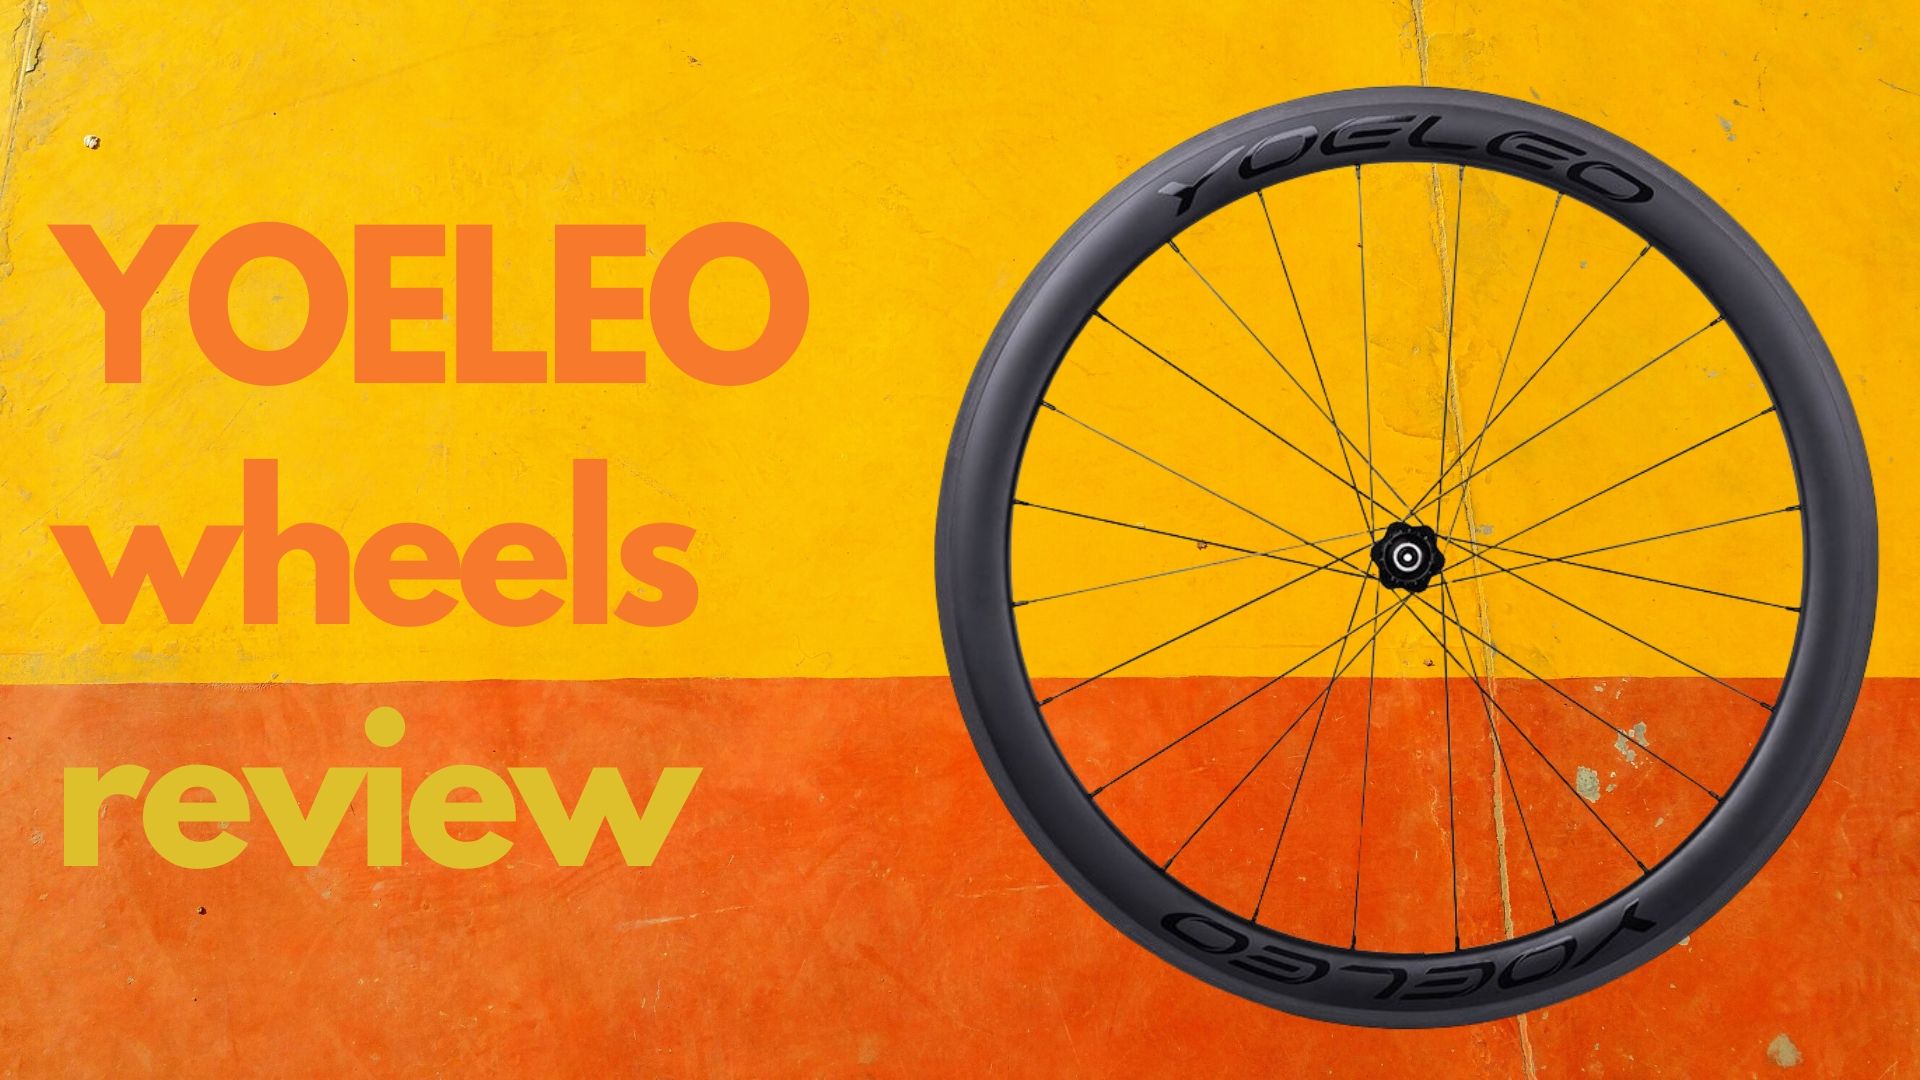 Yoeleo carbon clincher wheels reviewed